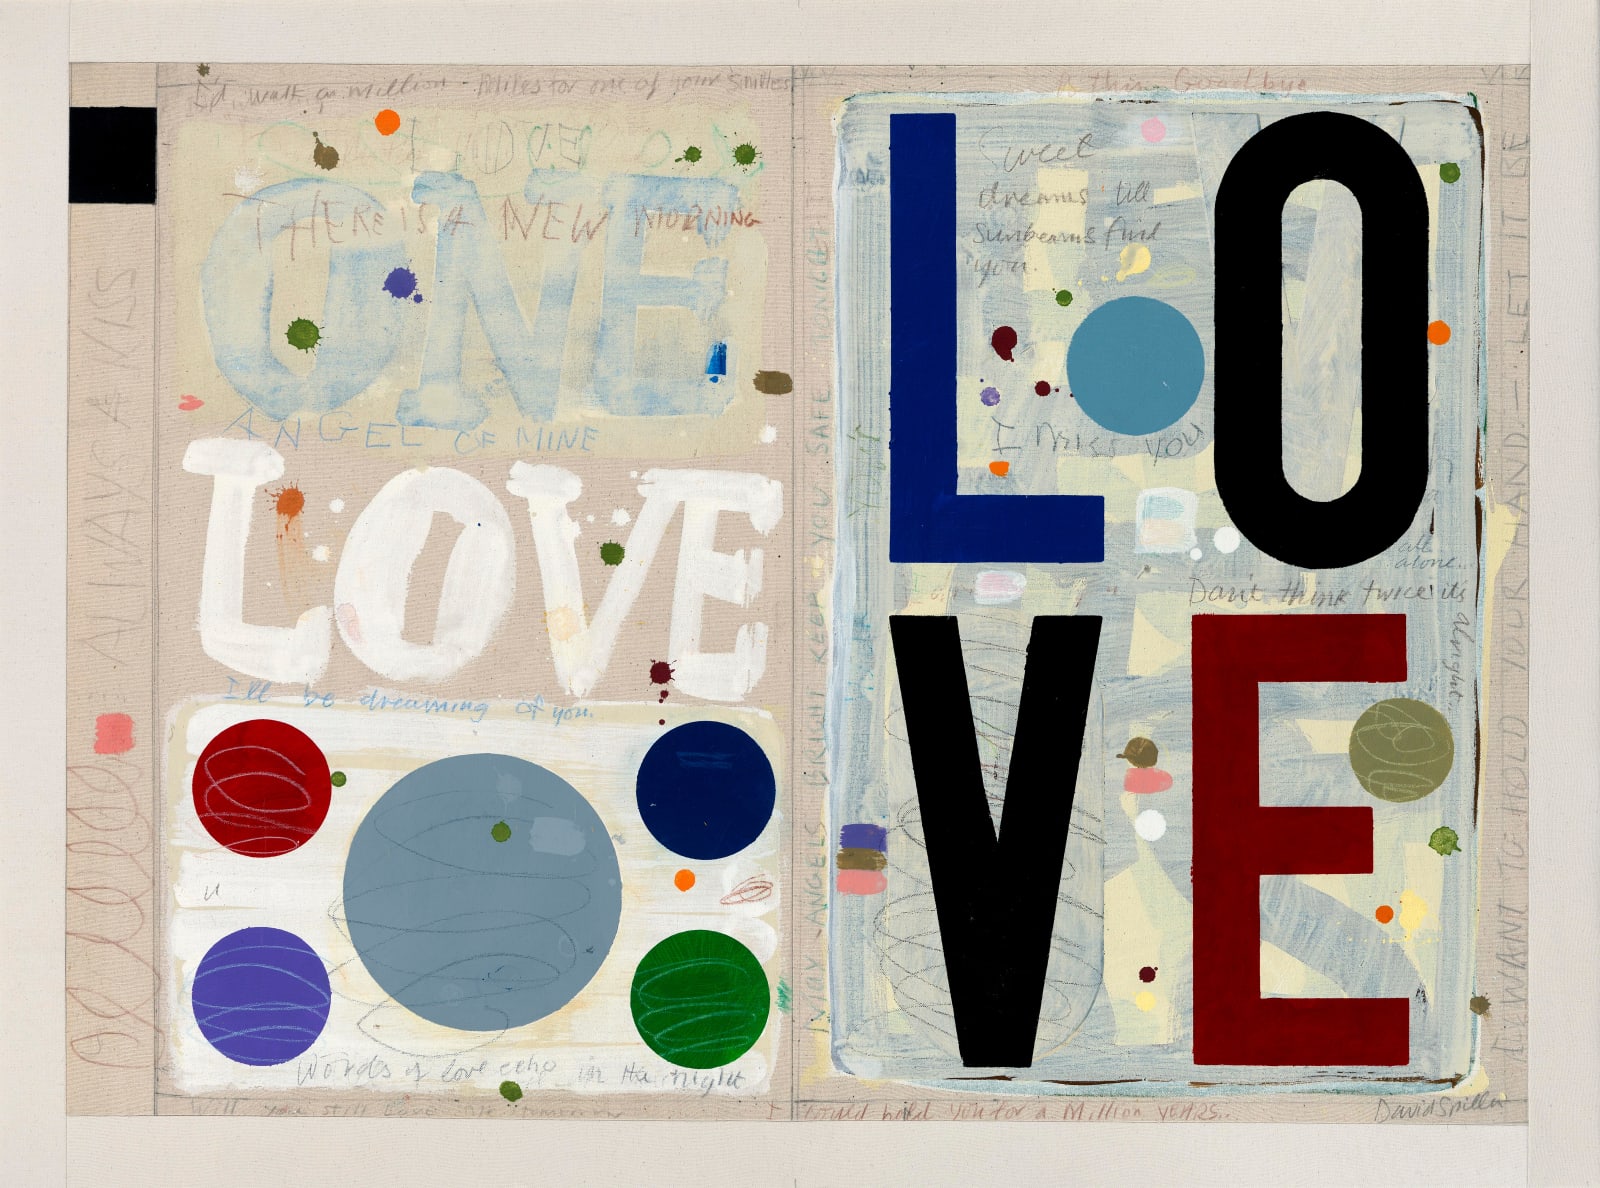 David Spiller, One love, 2015